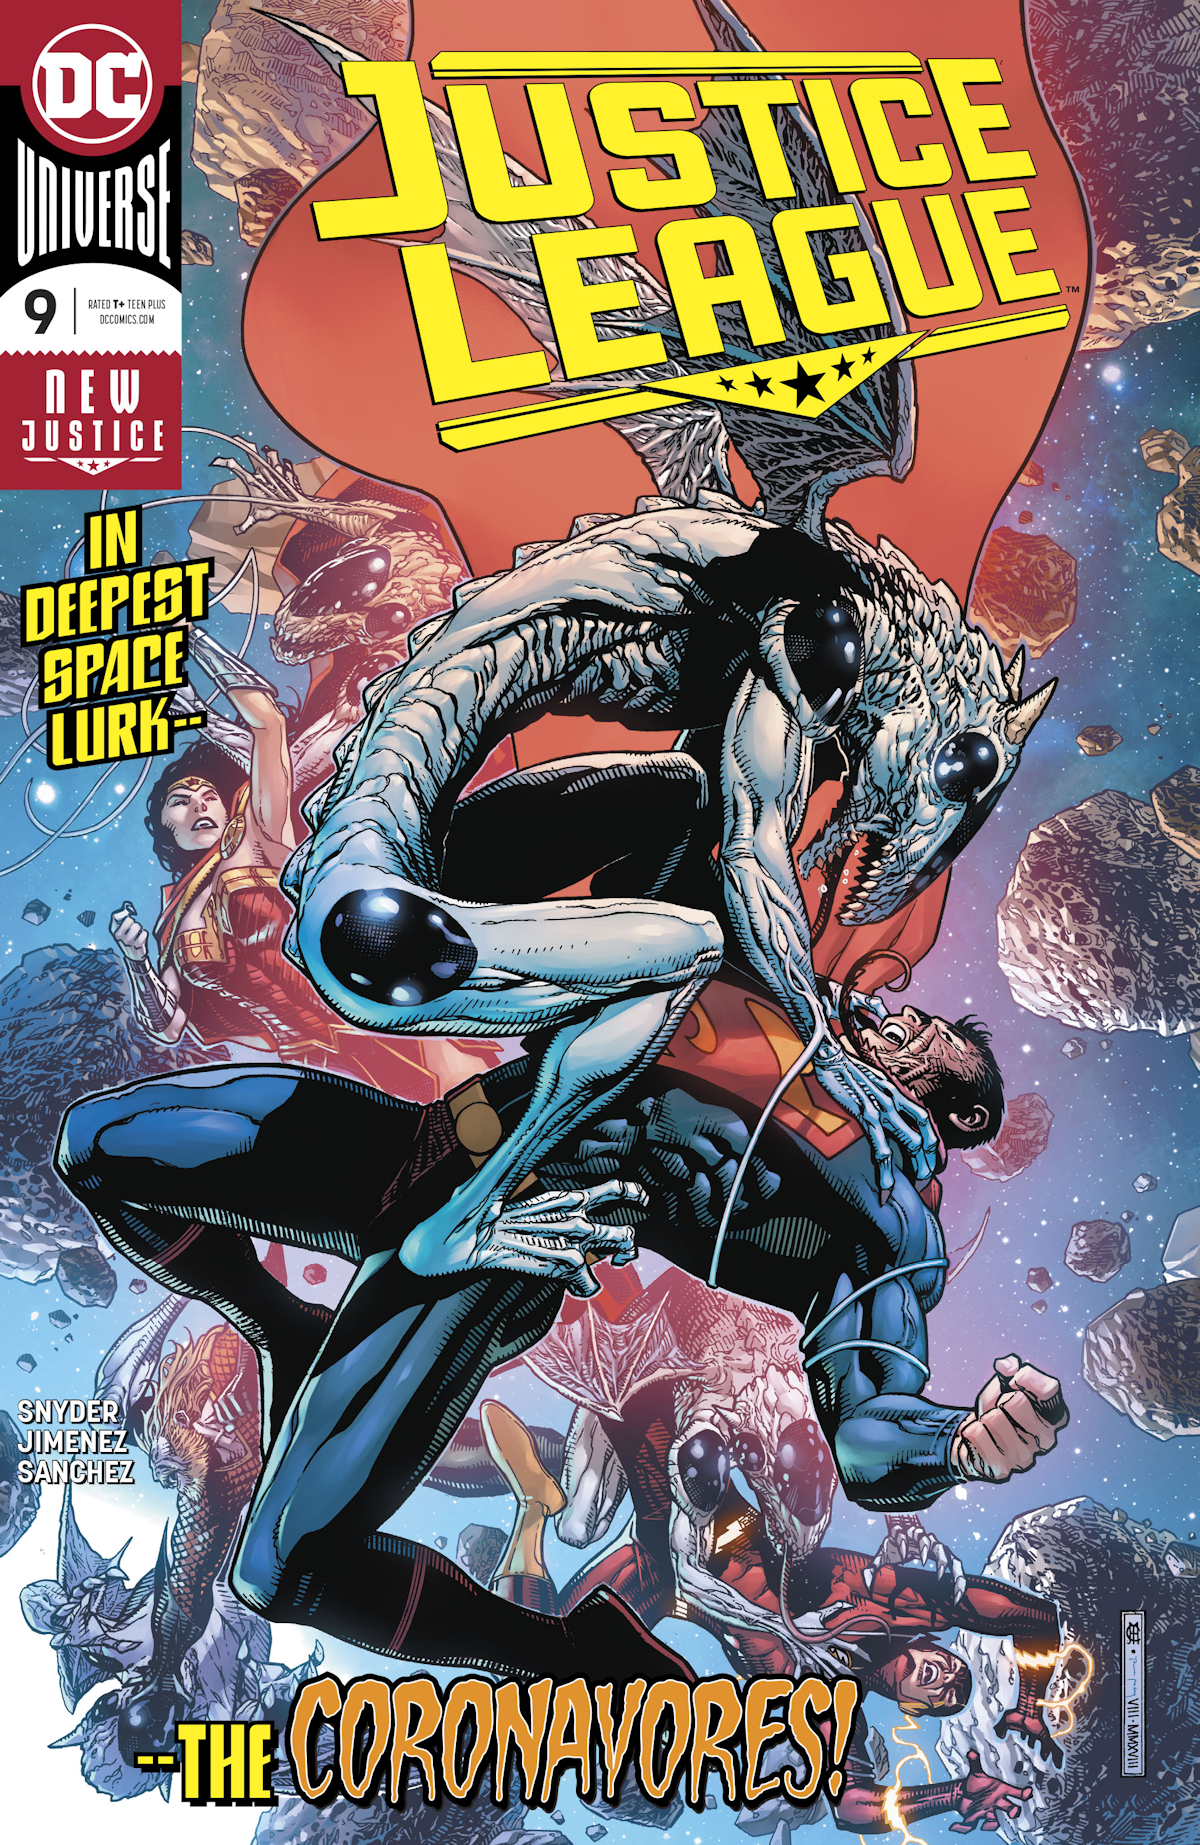 Justice League Vol. 4 9 (Cover A)